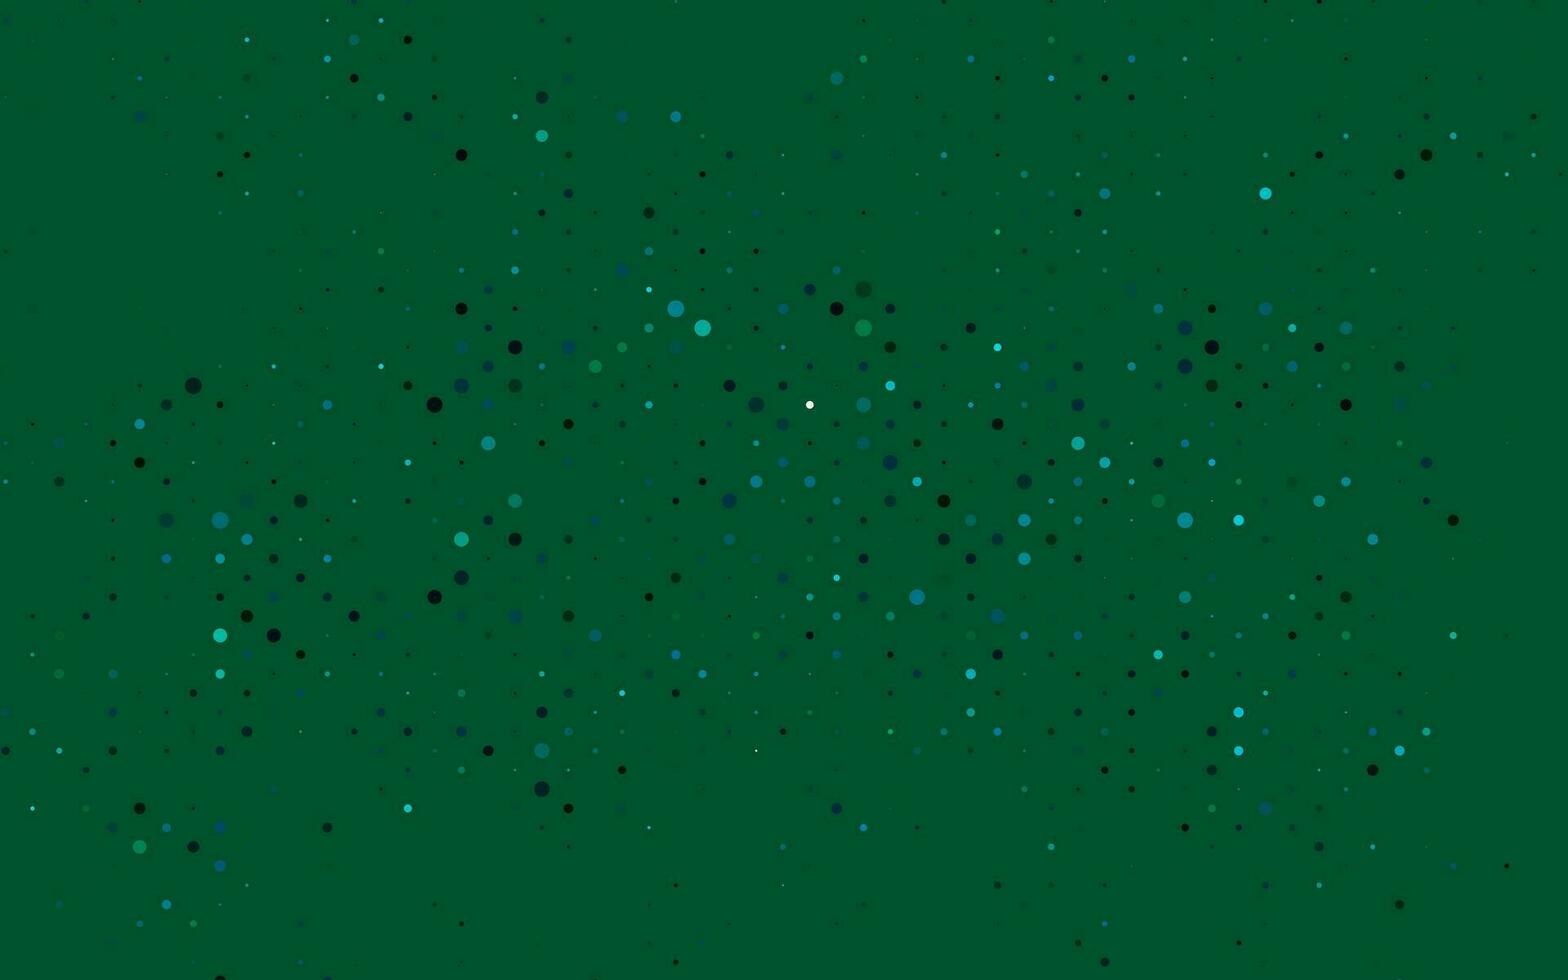 lichtblauwe, groene vectorlay-out met cirkelvormen. vector